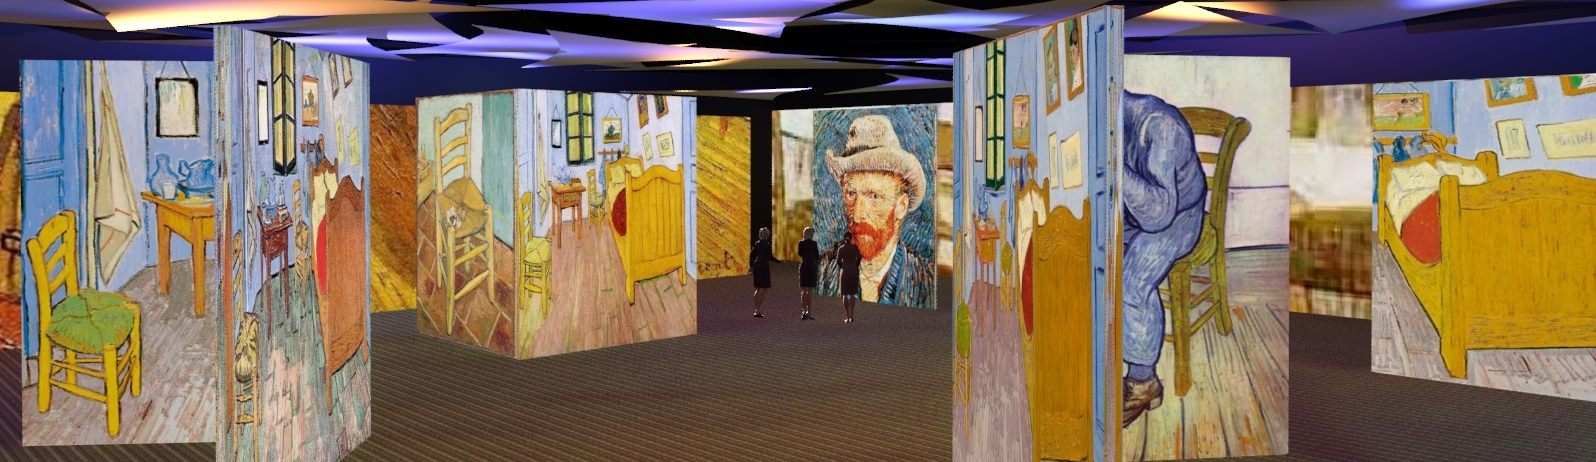 Van Gogh, the immersive experience